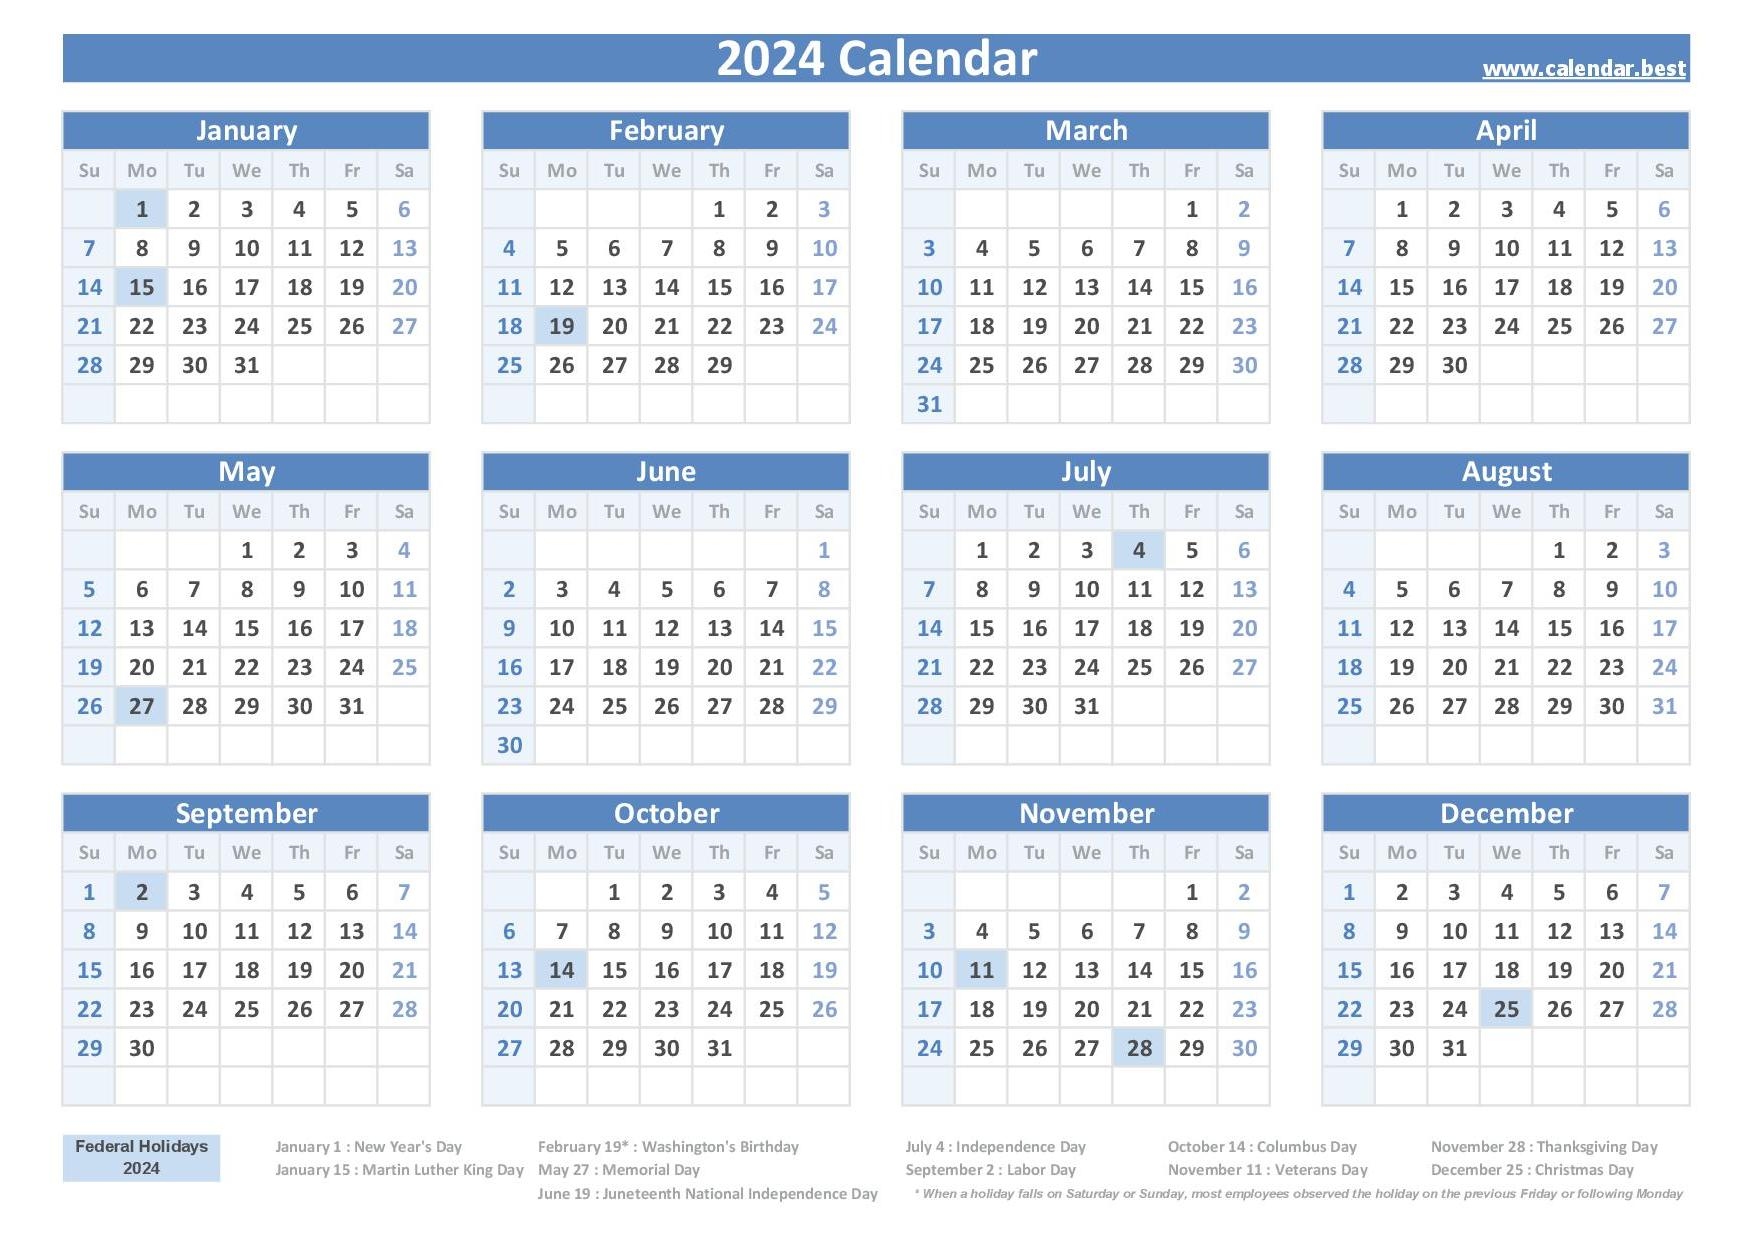 2024 Us Federal Holiday Calendar Printable Bill Marjie - Free Printable 2024 Calendar Templates With Holidays